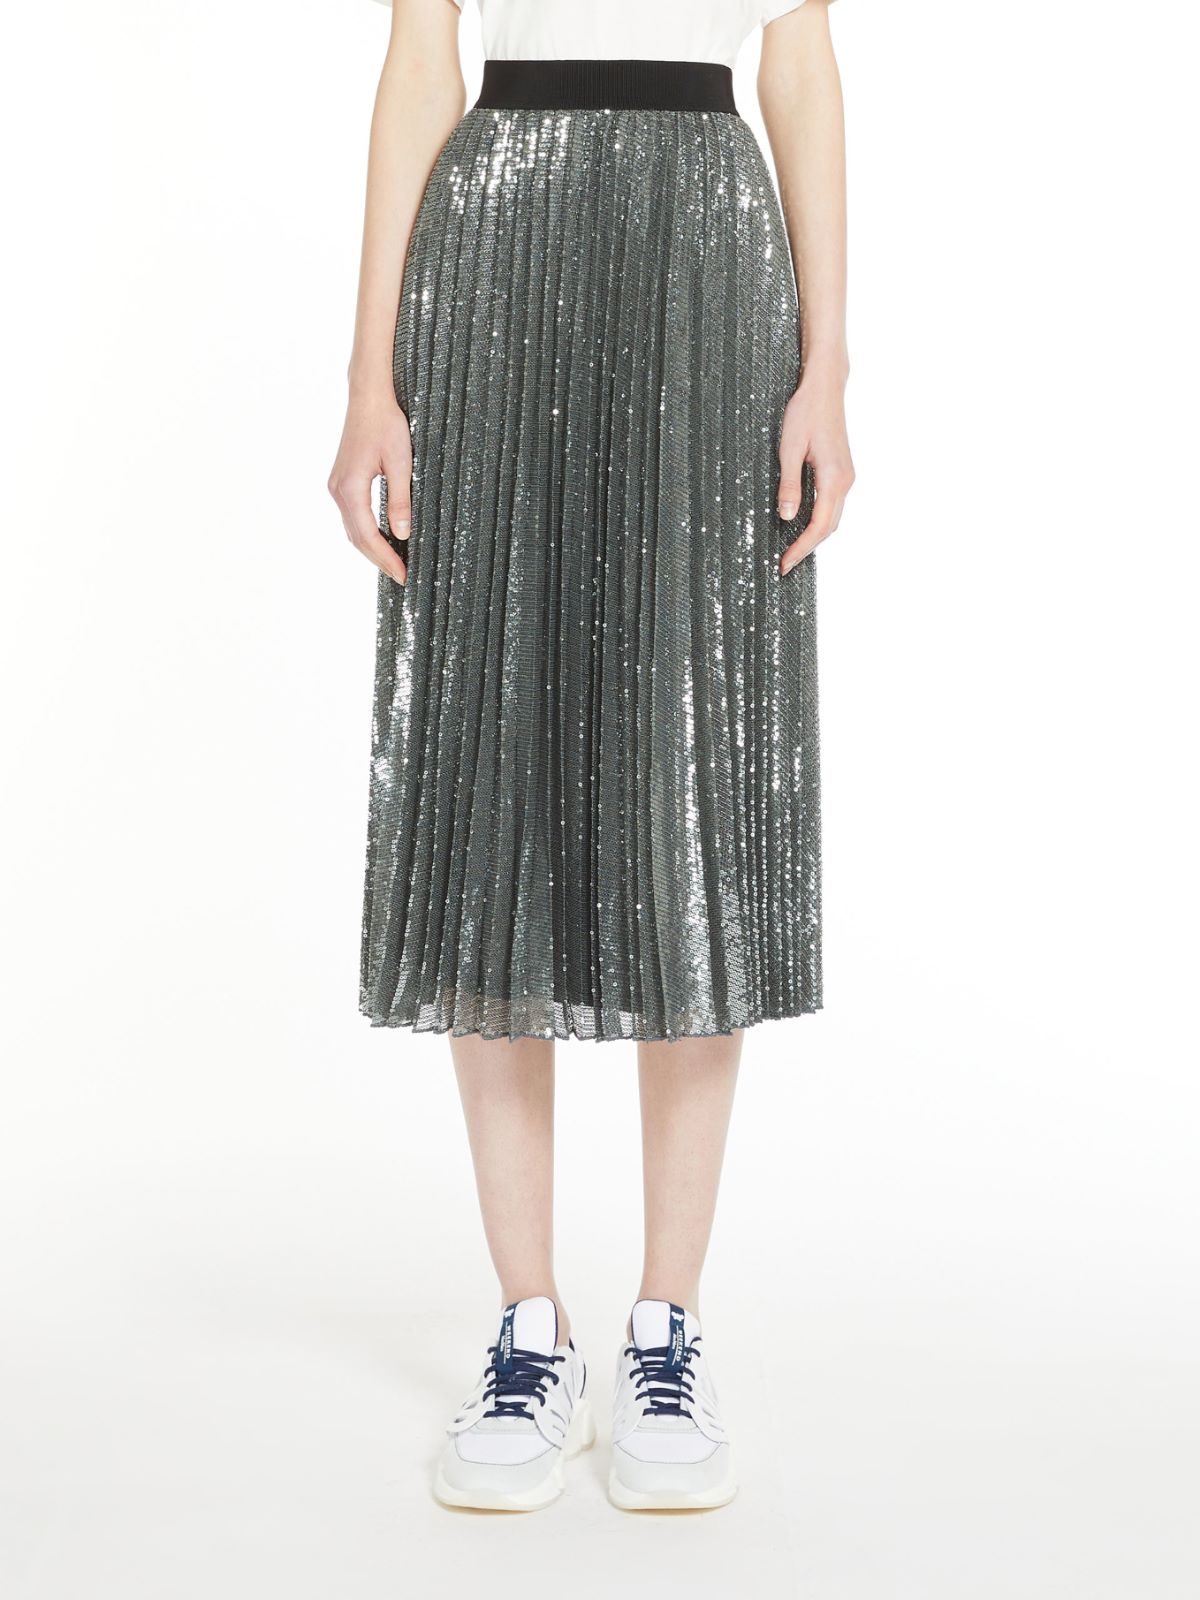 Tulle skirt with sequins - MEDIUM GREY - Weekend Max Mara - 2